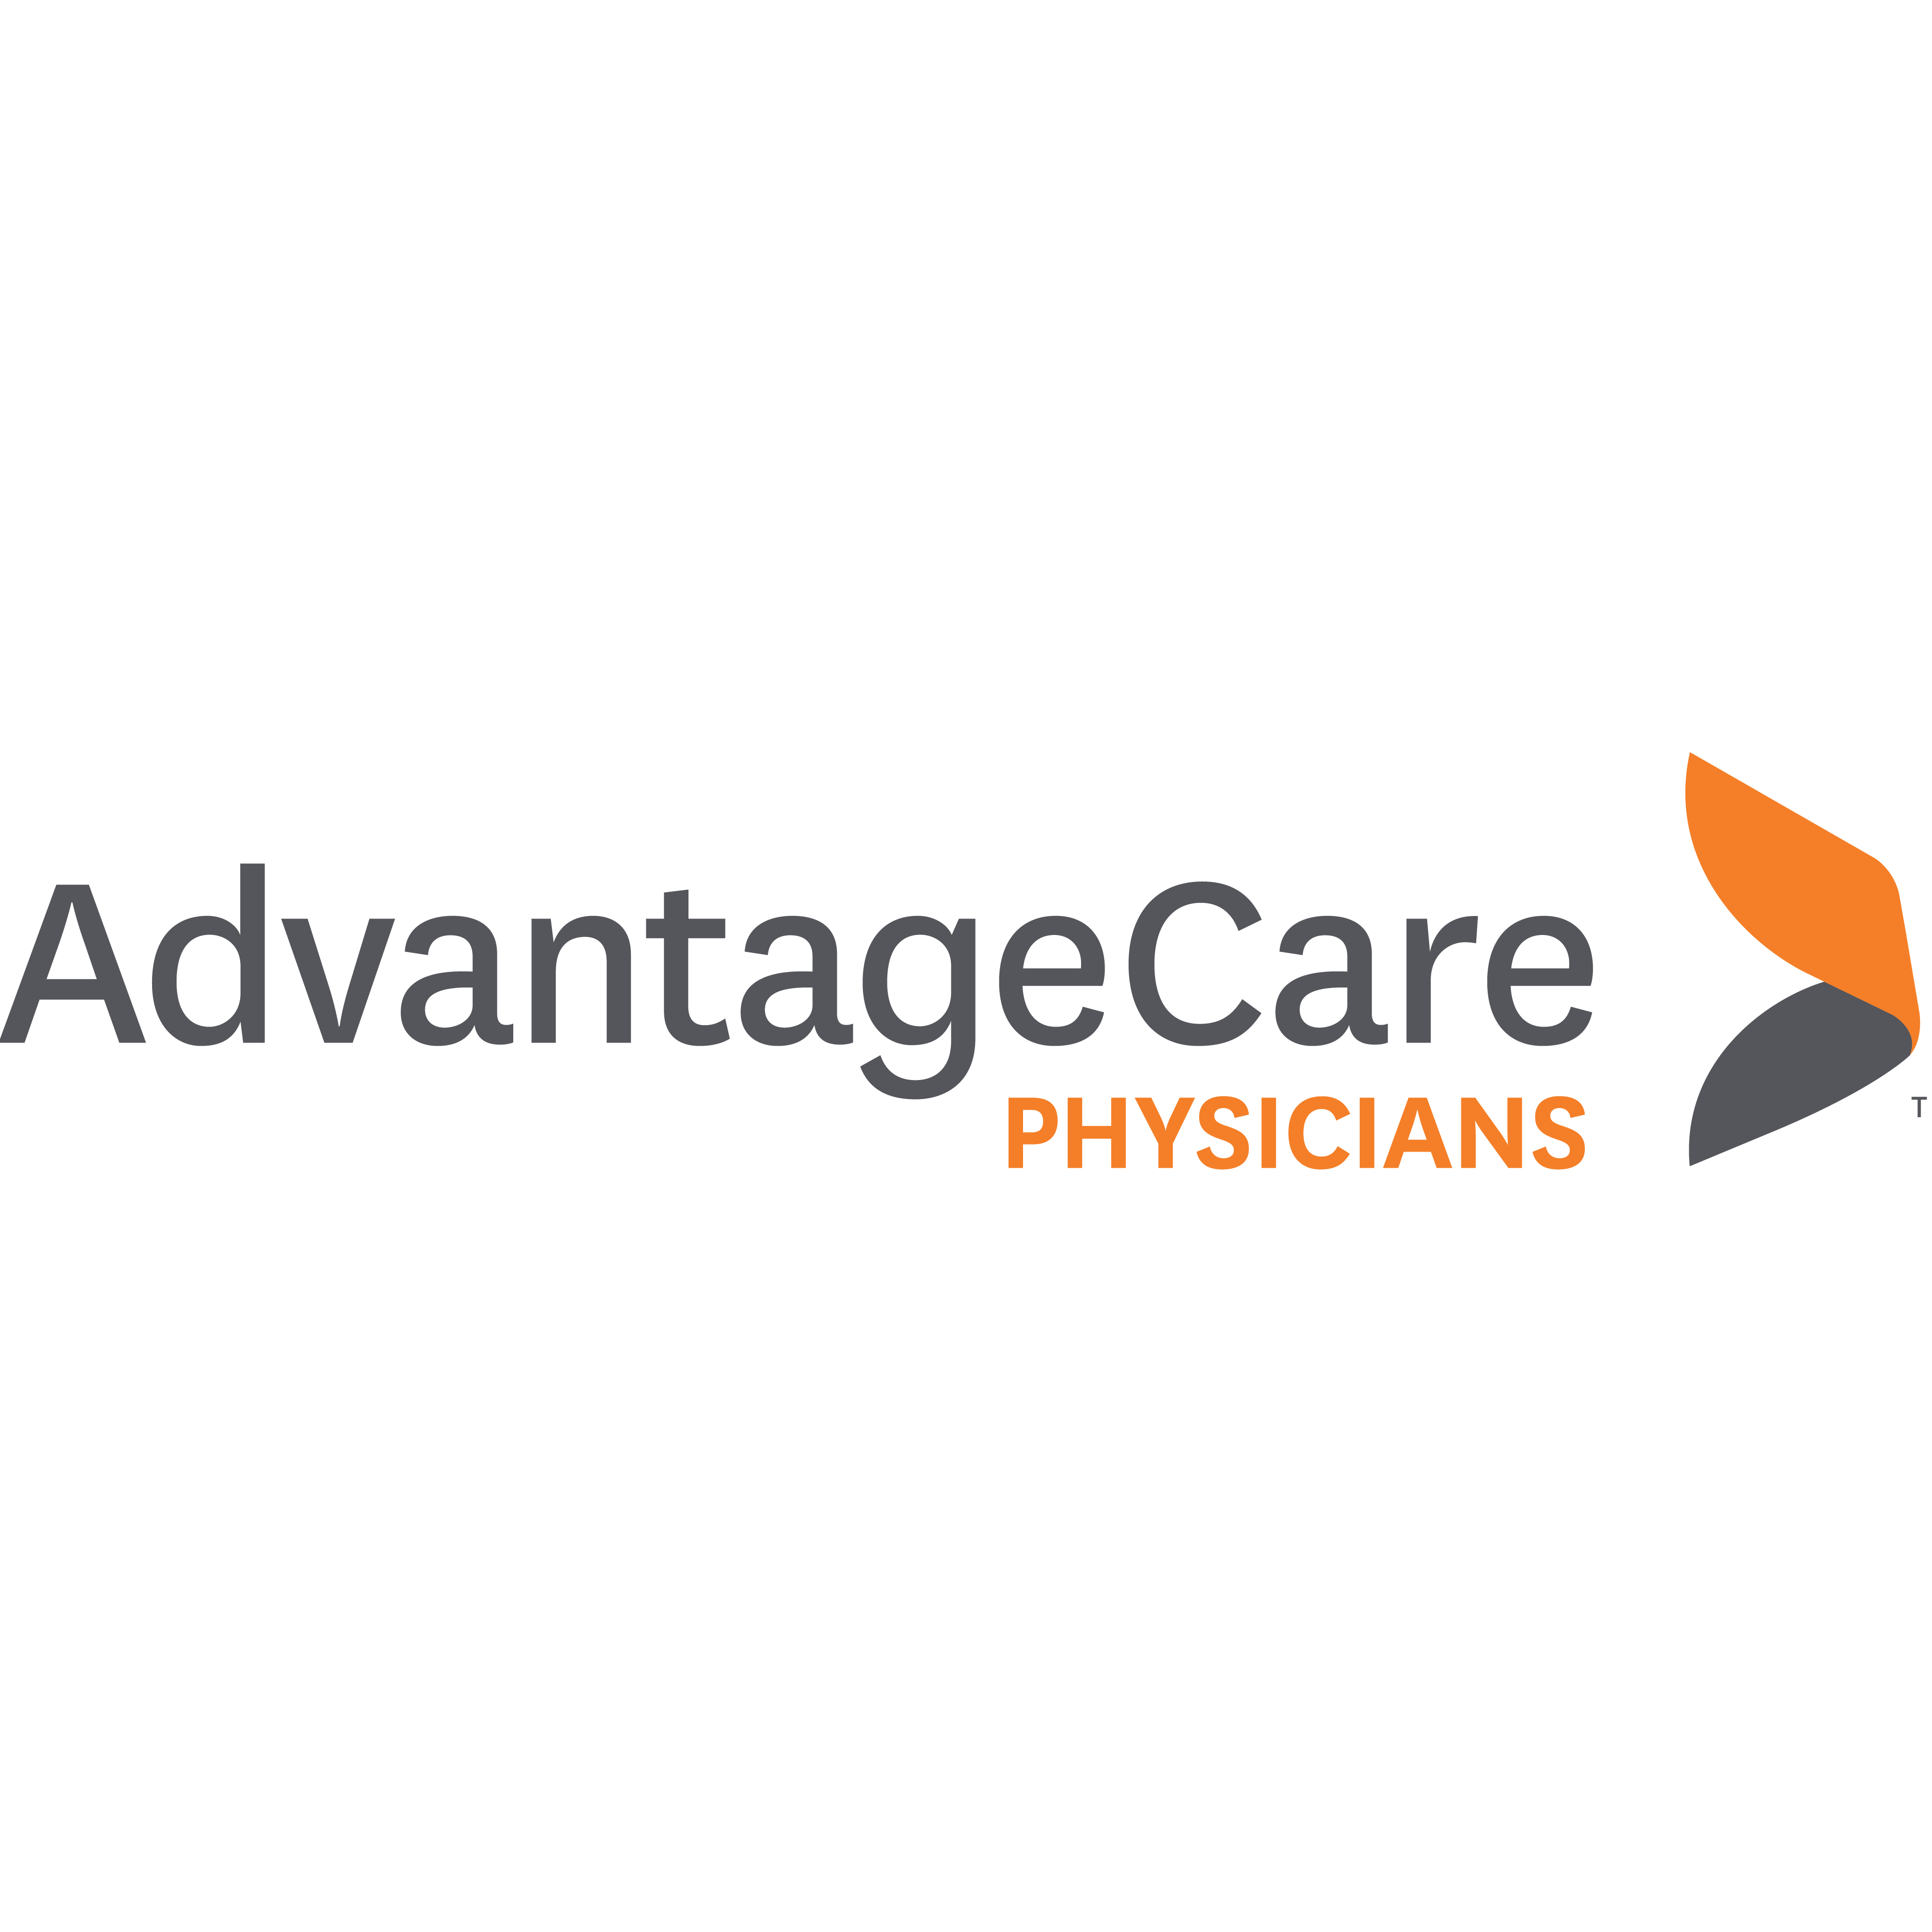 AdvantageCare Physicians - Kings Highway Medical Office Logo